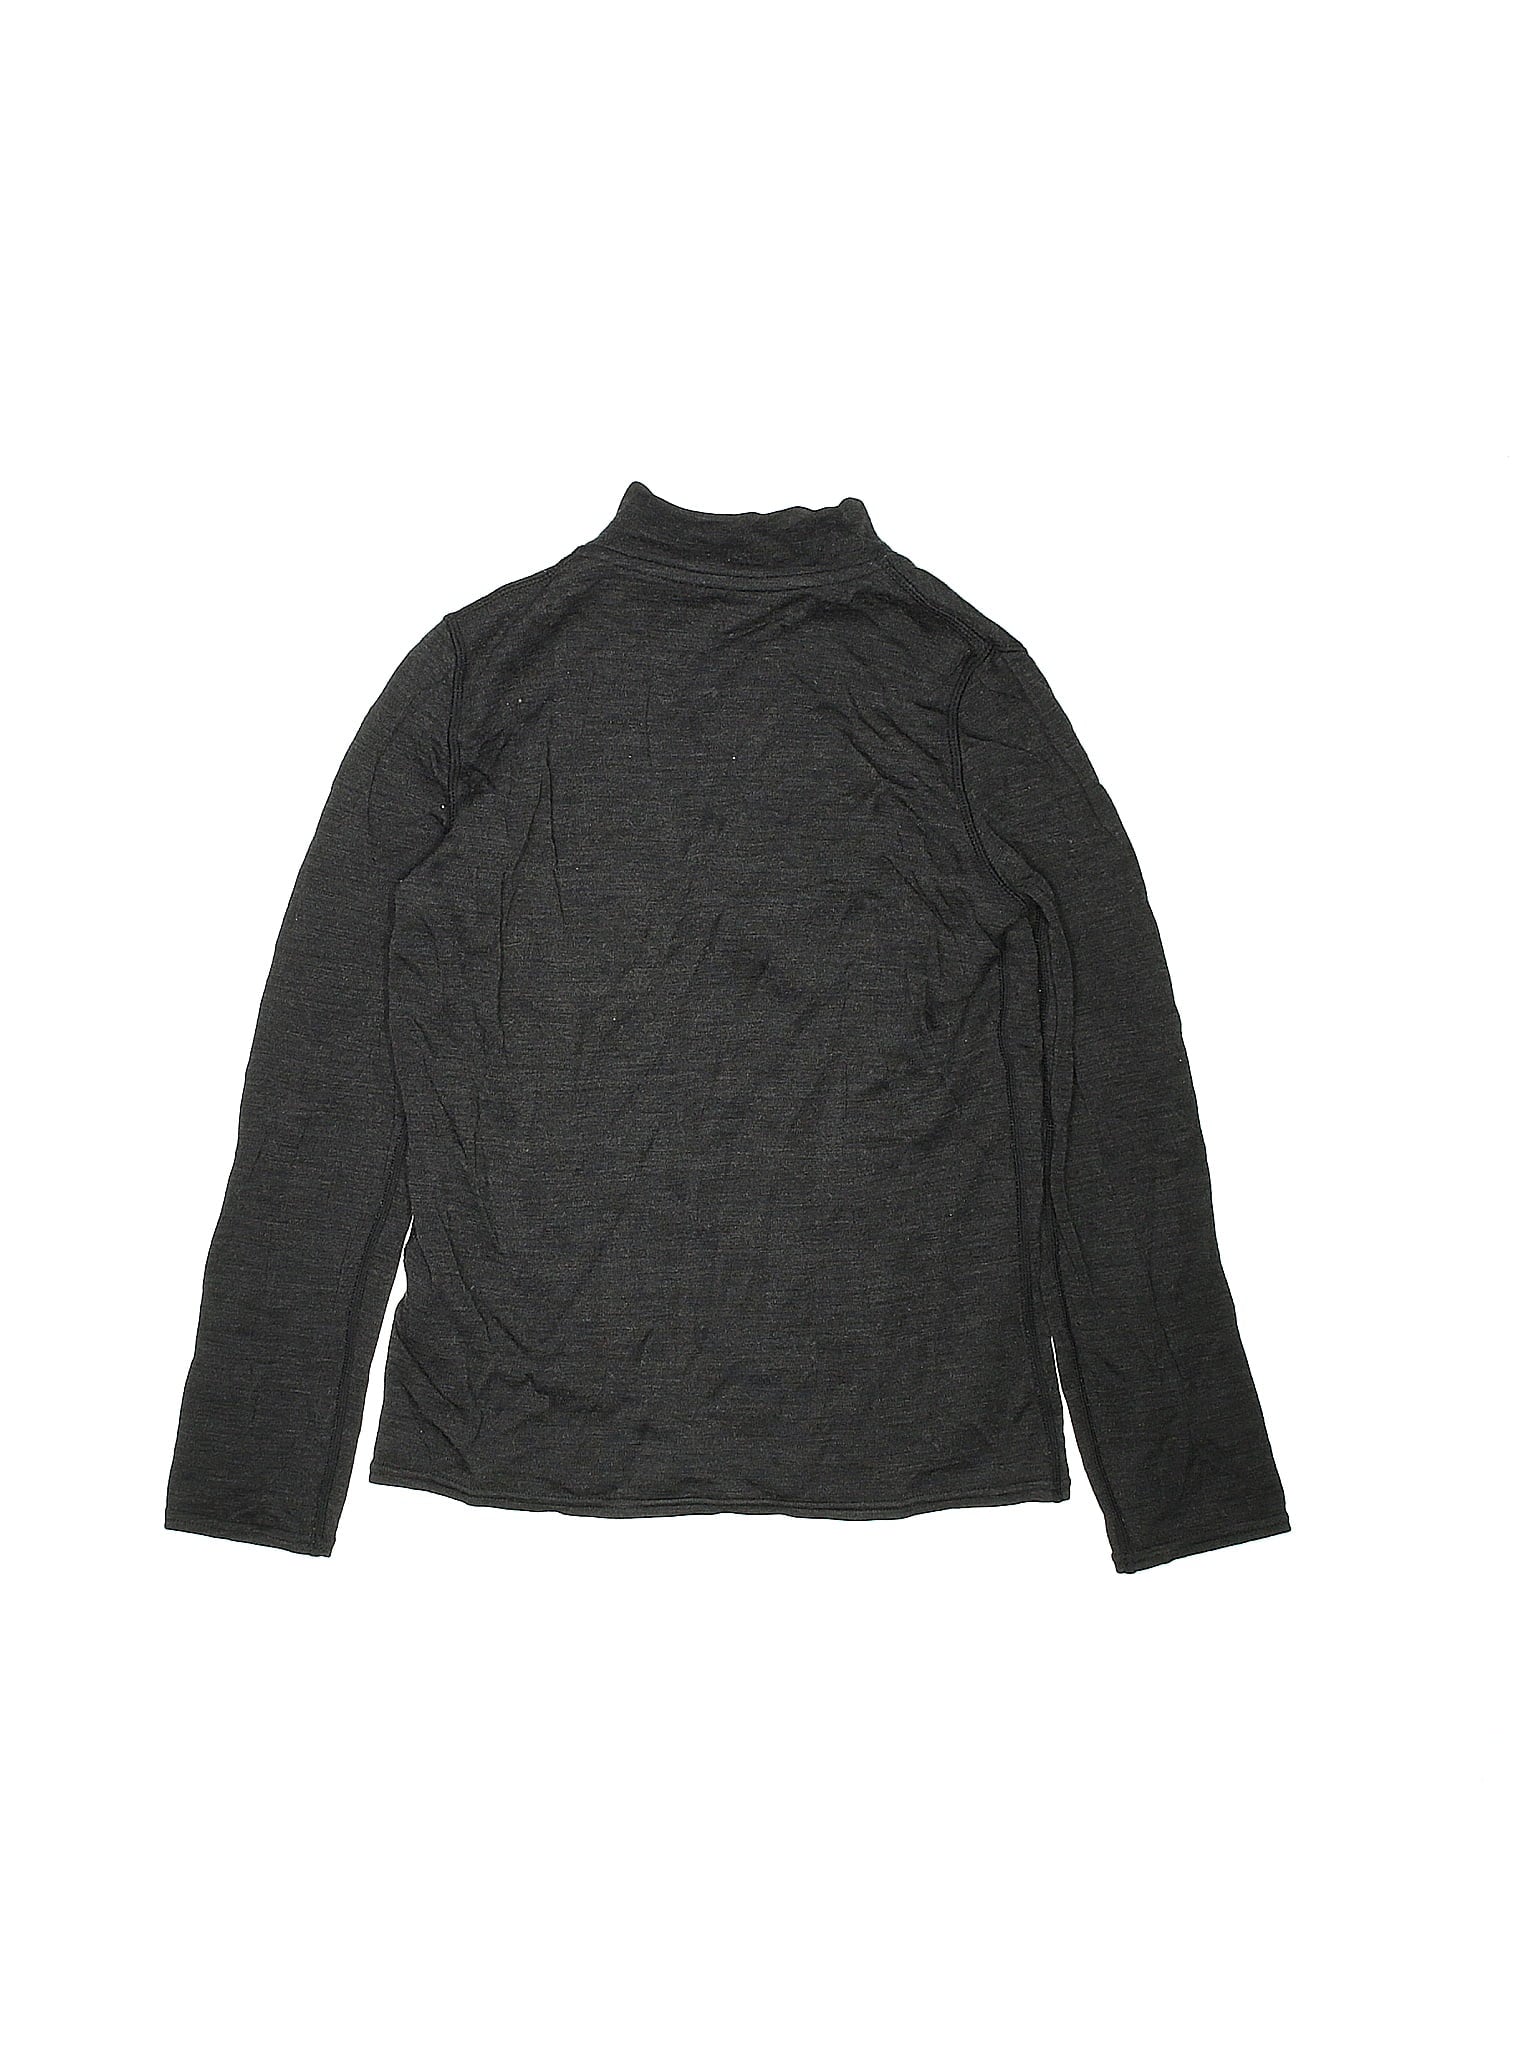 Sweatshirt size - X-Large (Tots)